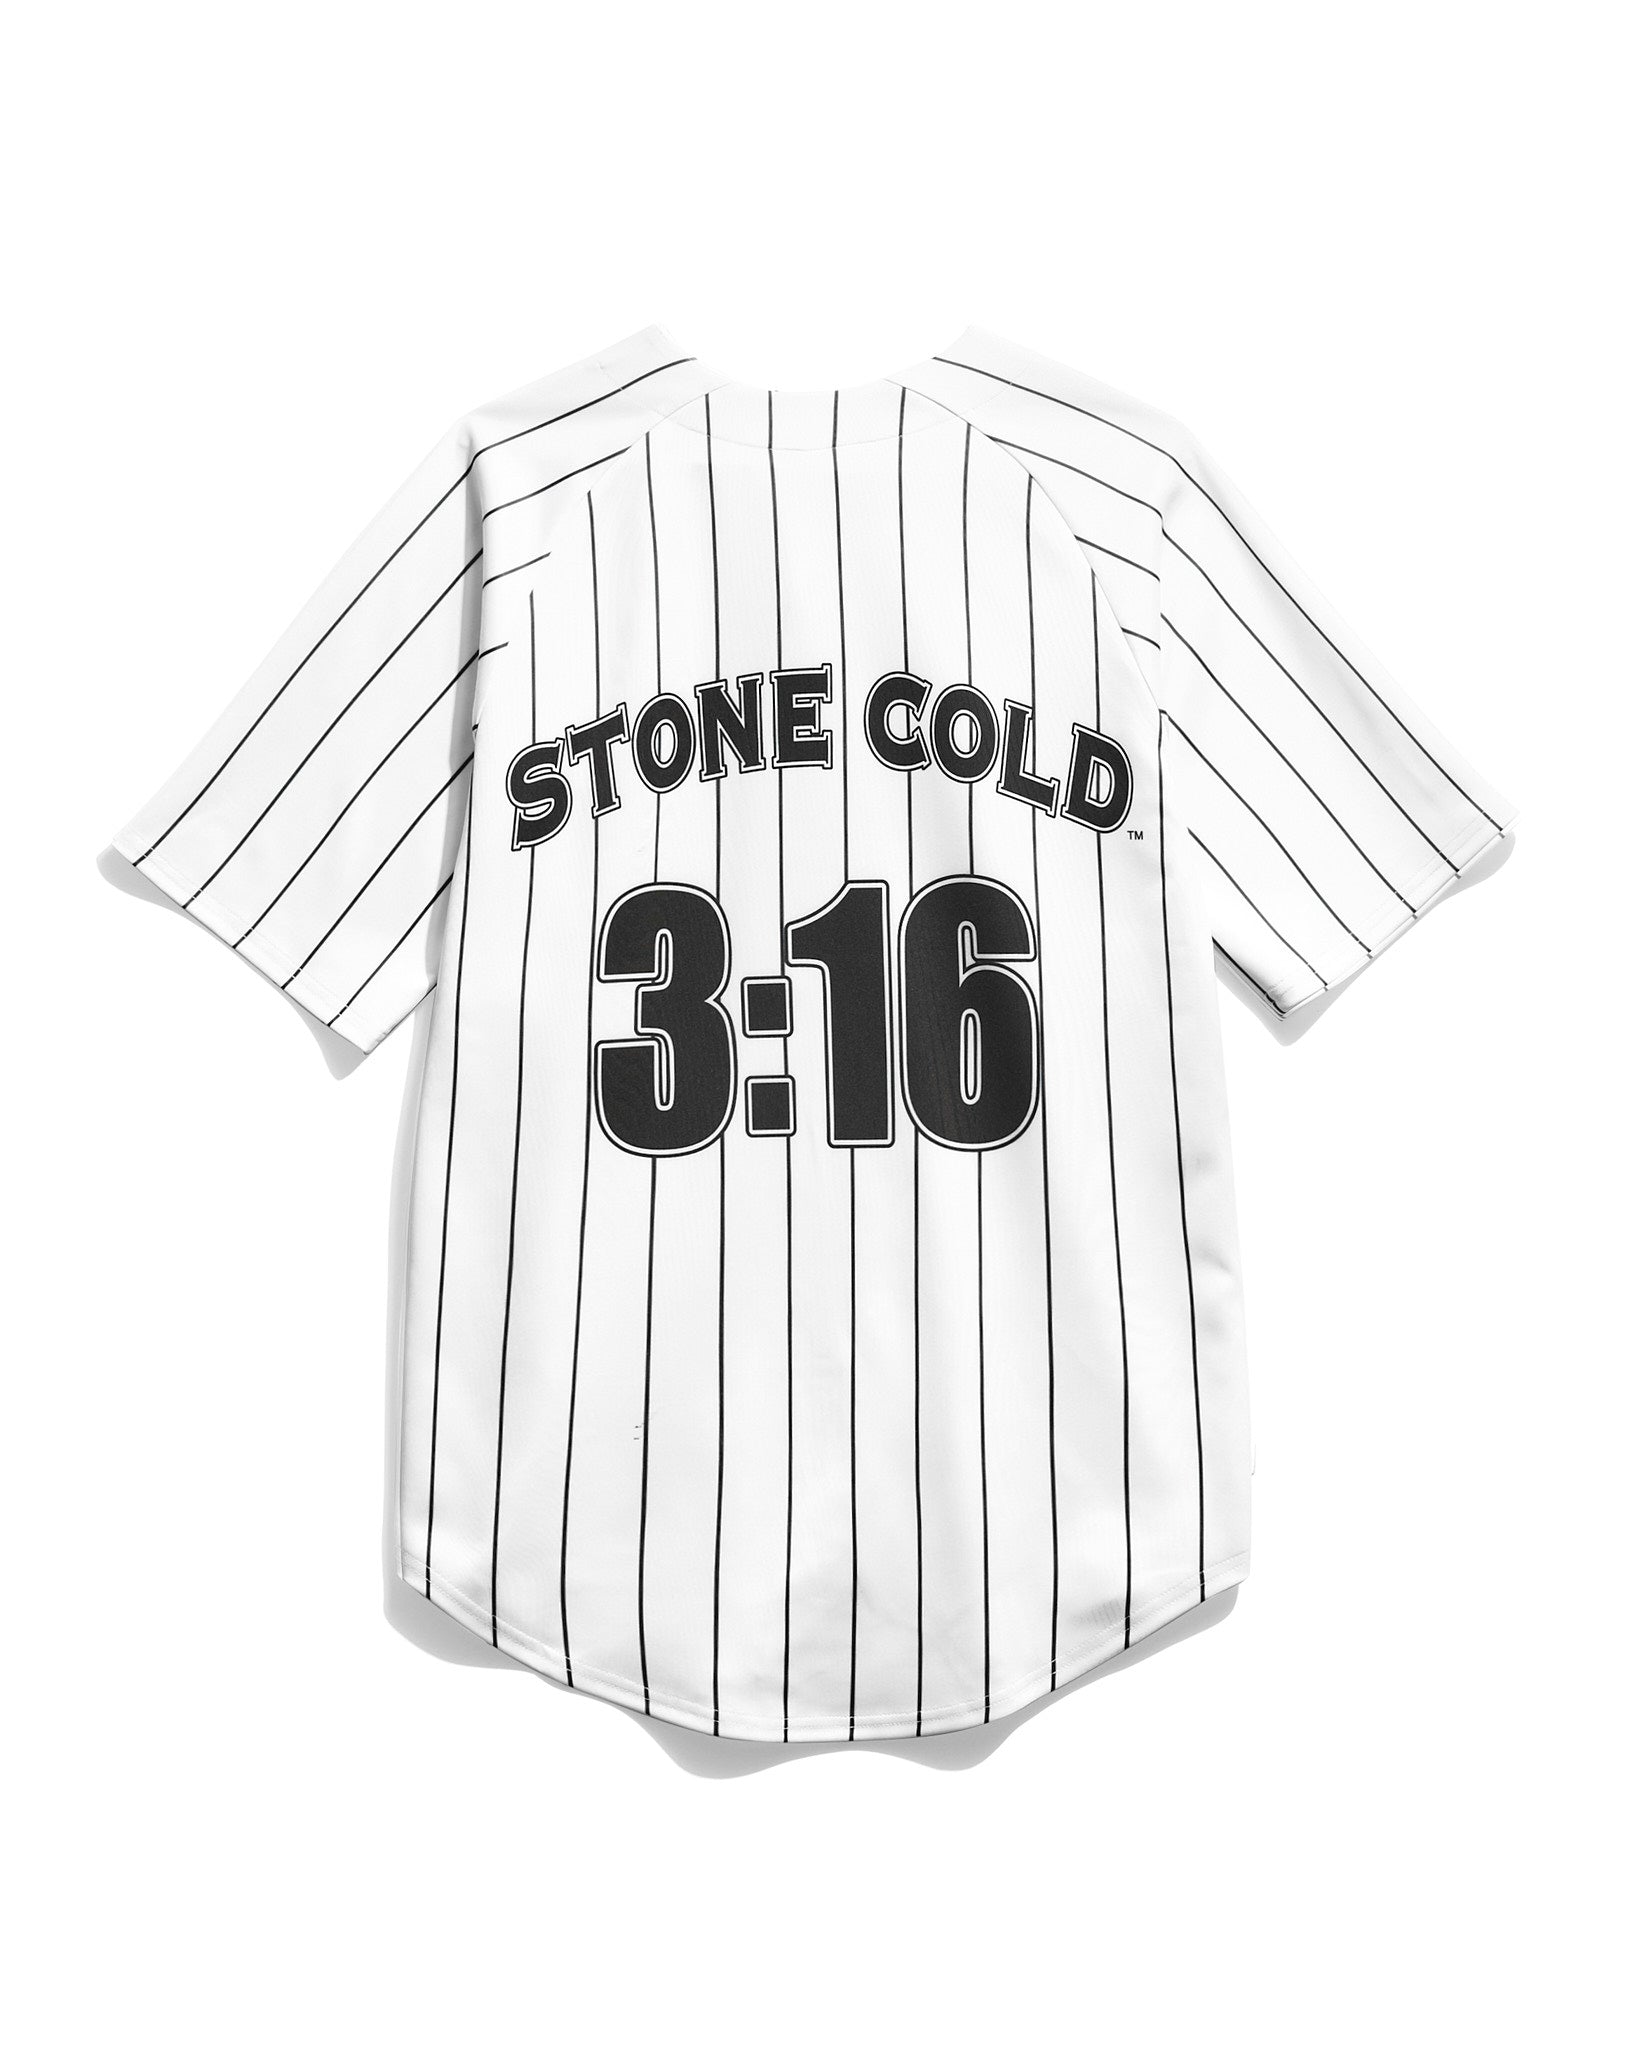 Mlb Shop Red Sox Stone Cold Steve Austin 3 16 Sweatshirt Boston Strong -  Sgatee